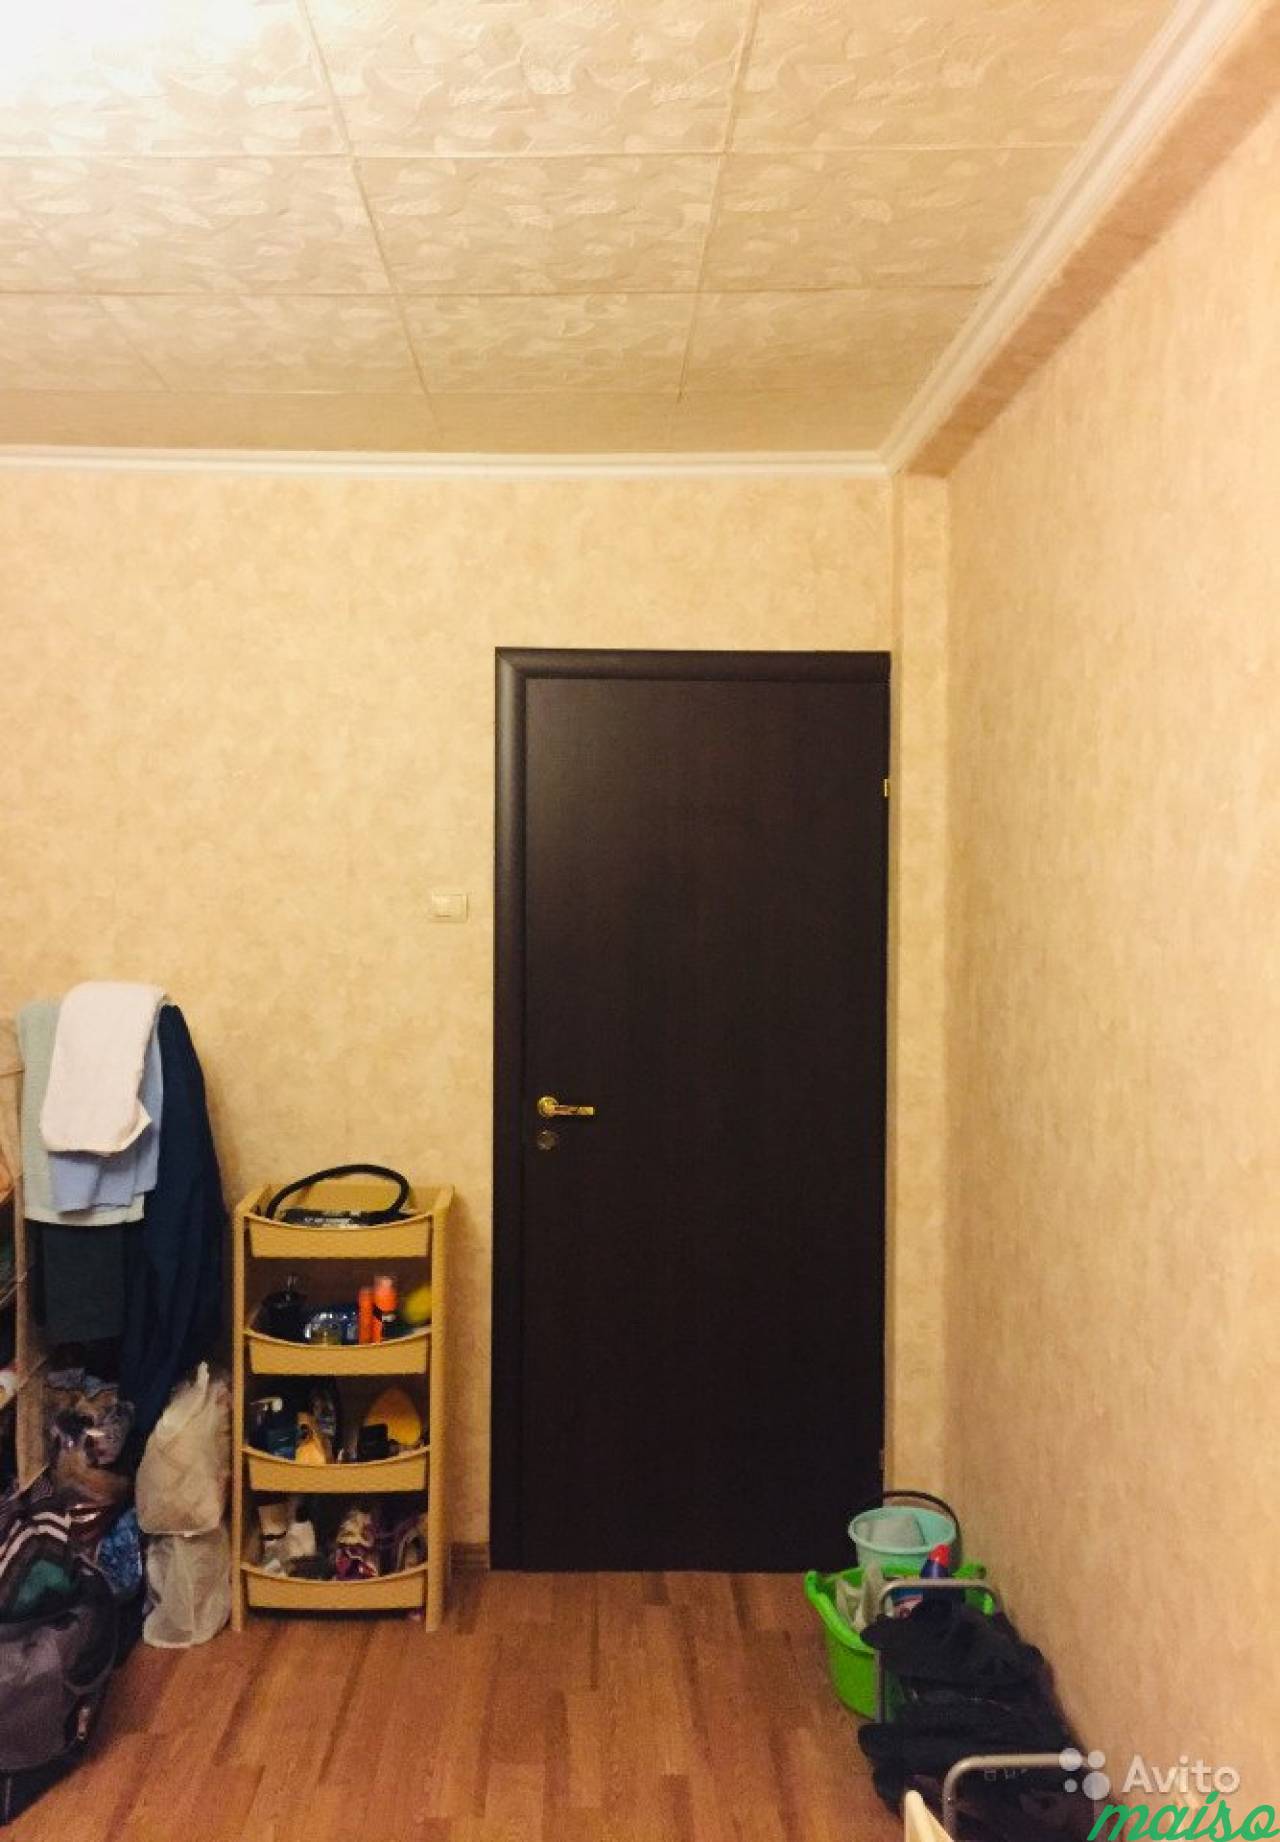 Комната 15.8 м² в 3-к, 1/5 эт. в Санкт-Петербурге. Фото 2